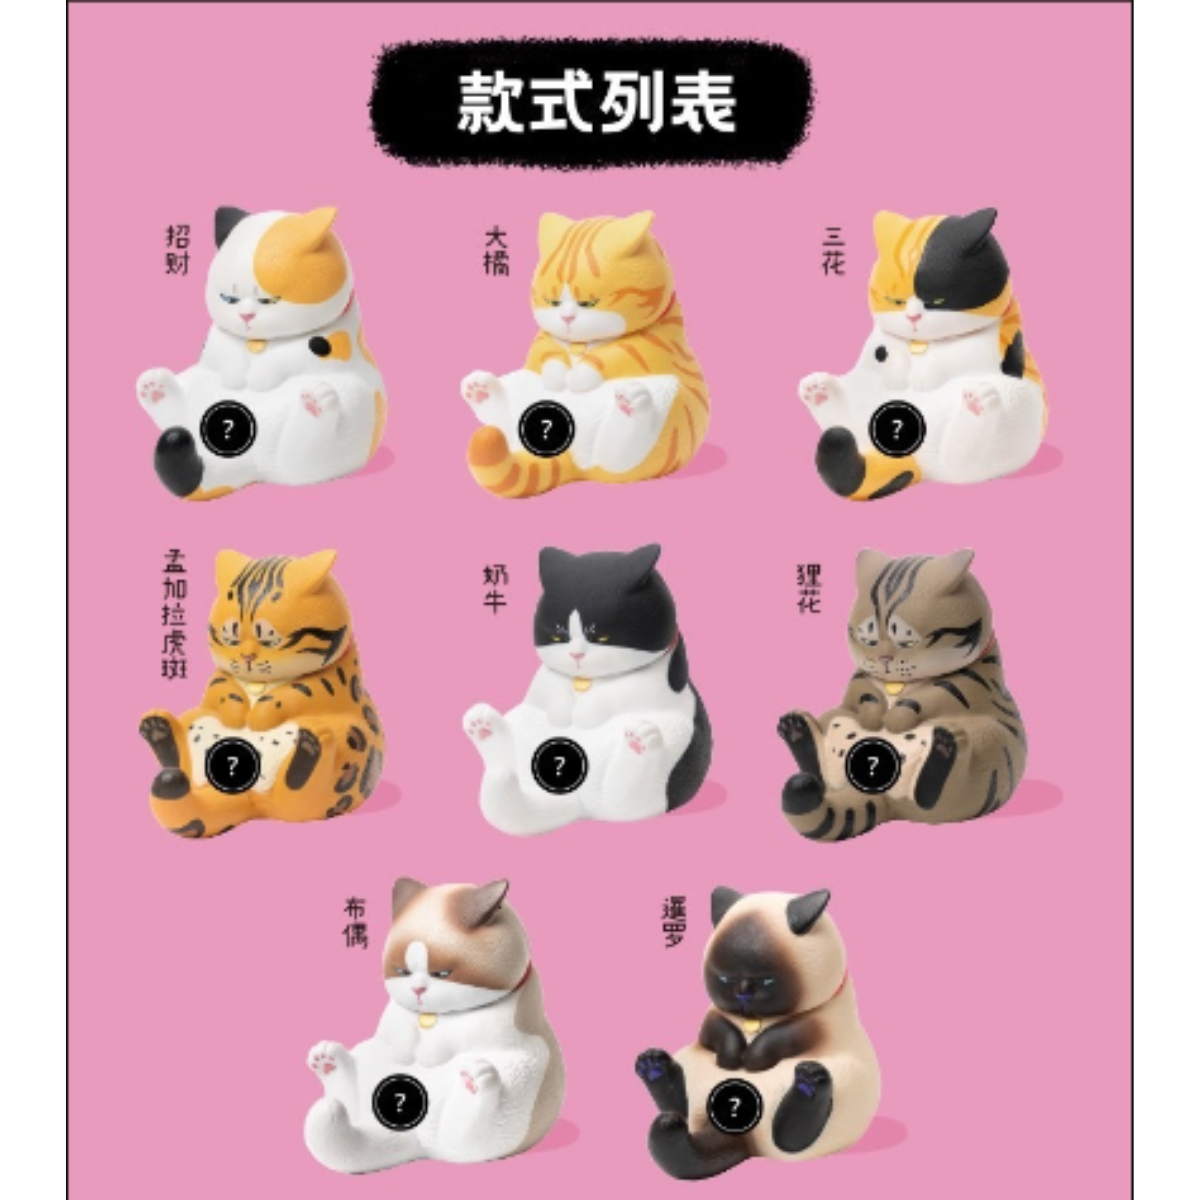 CJoy Original Cat Balls Third Generation Series-Single Box (Random)-CJoy-Ace Cards & Collectibles